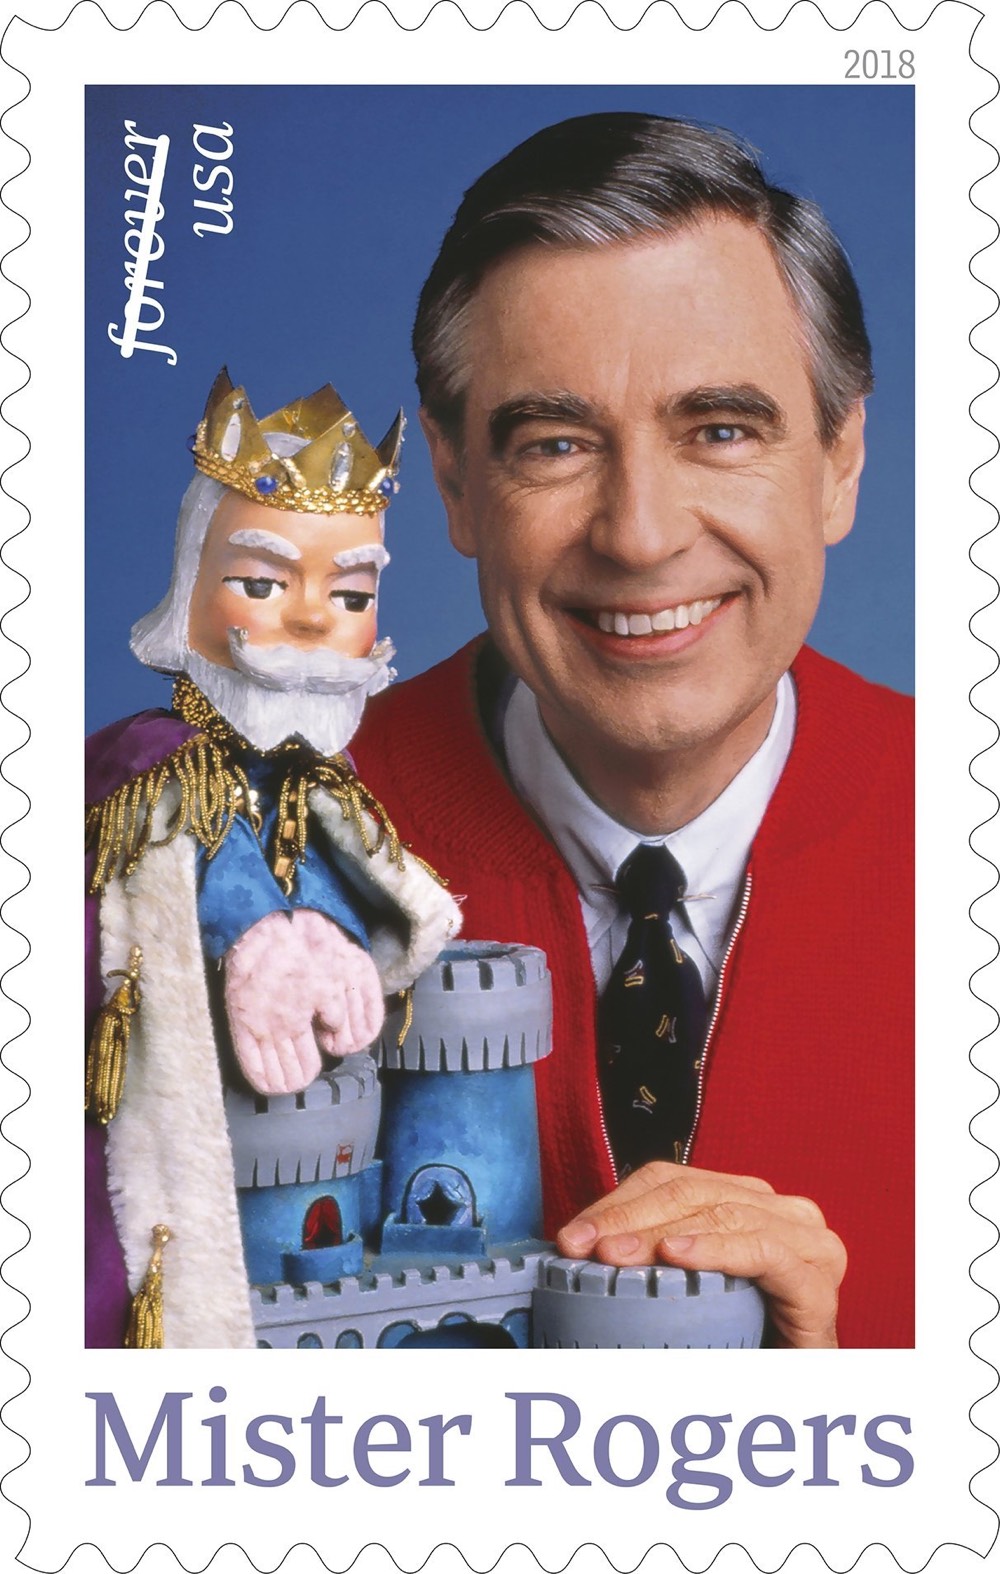 Mr Rogers Stamp